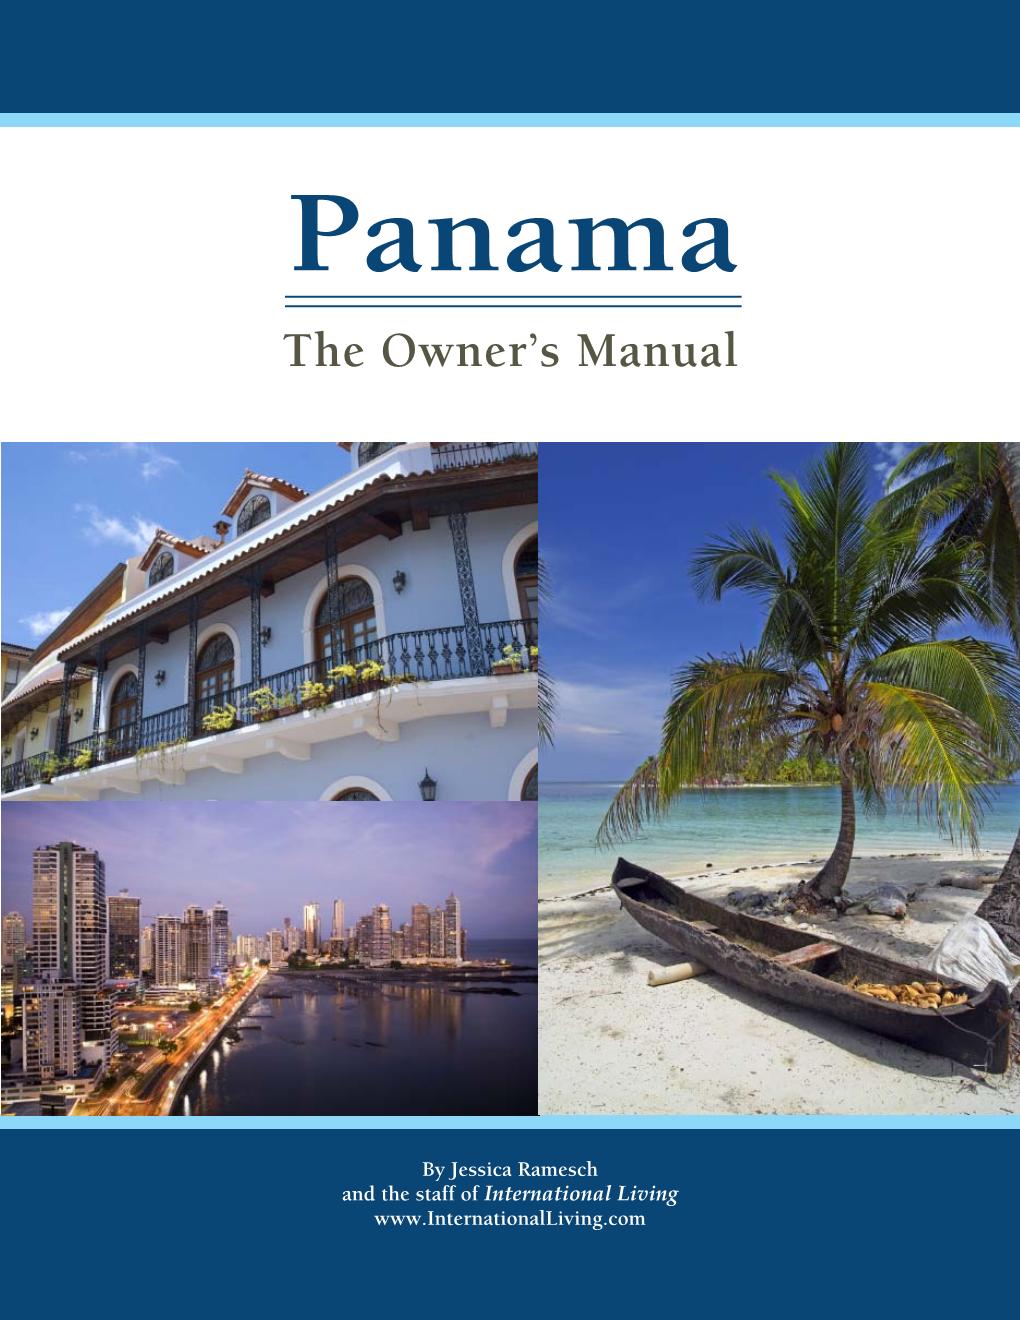 Panama: The Owner's Manual (2010)